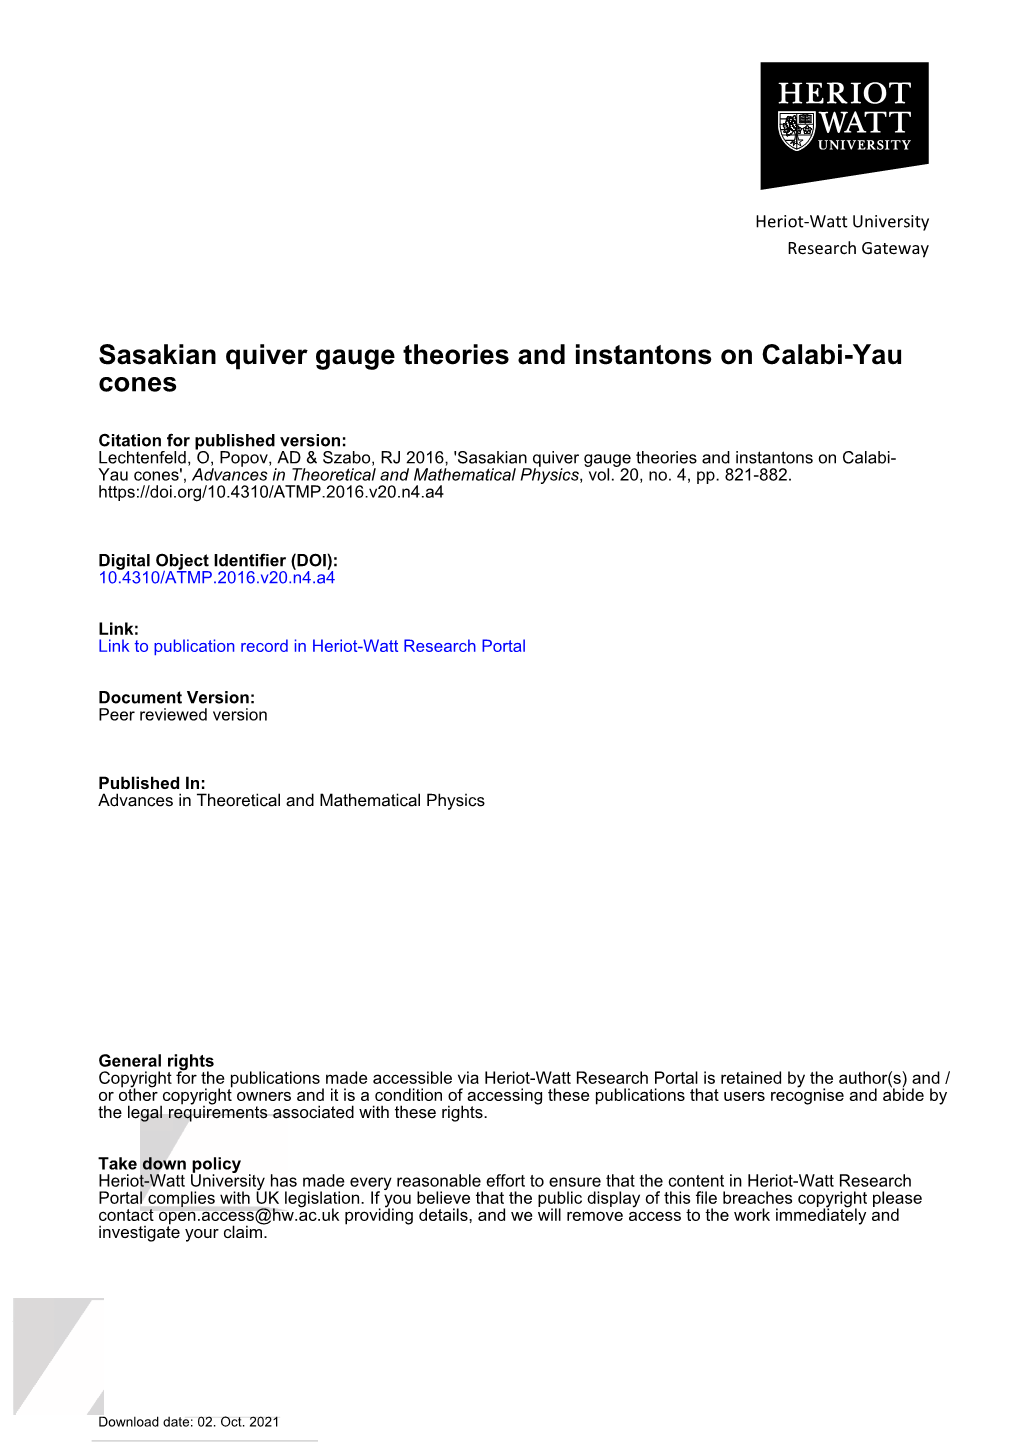 Sasakian Quiver Gauge Theories and Instantons on Calabi-Yau Cones